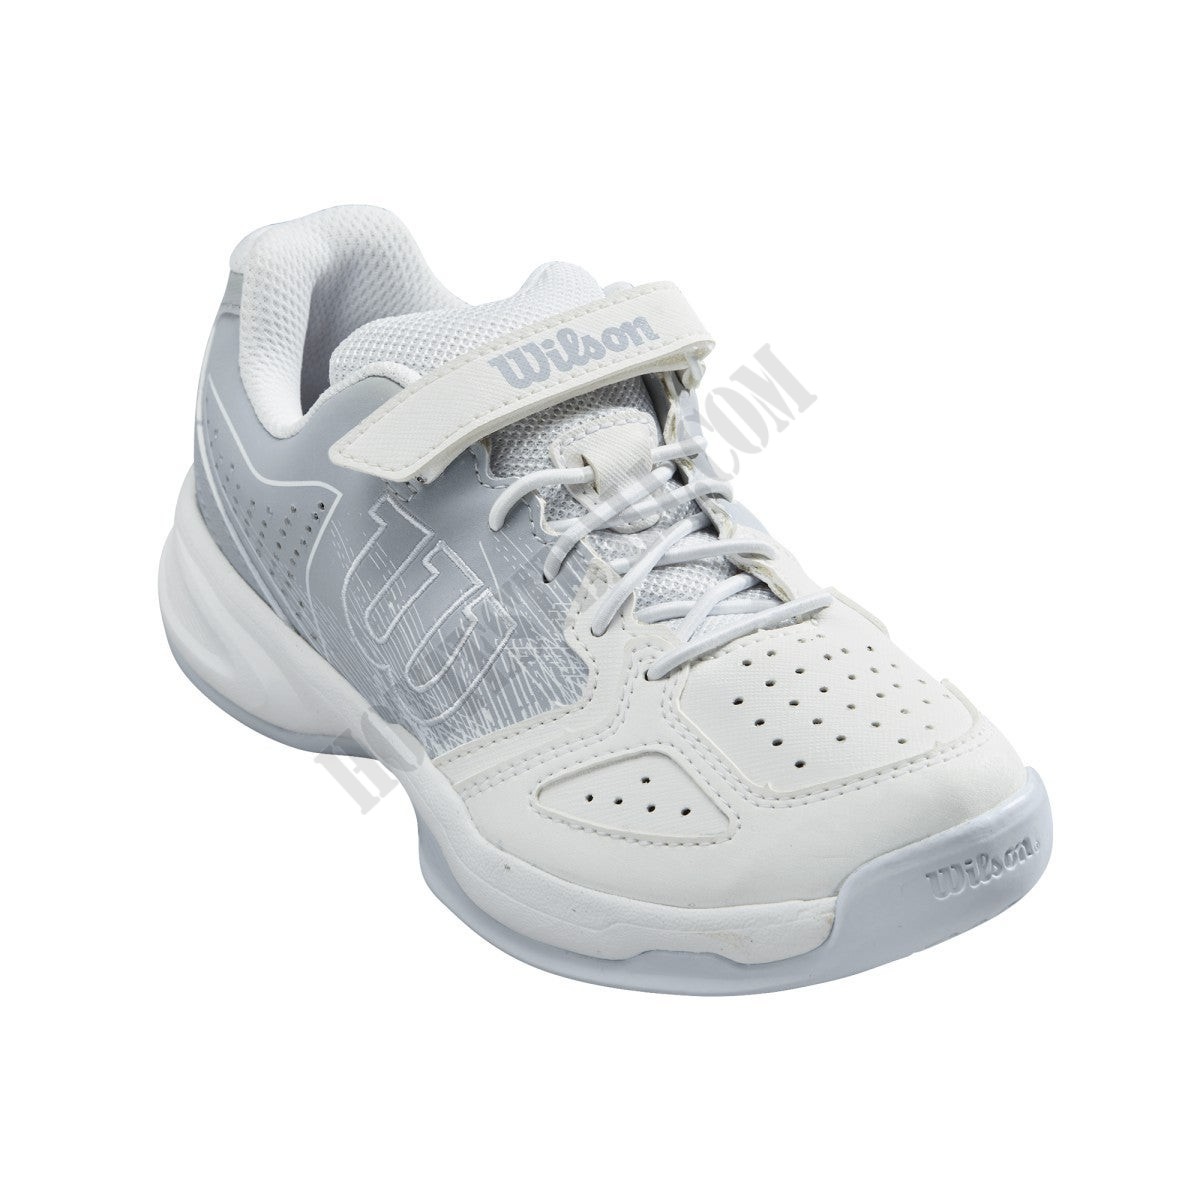 Kaos Kid Tennis Shoe - Wilson Discount Store - -0